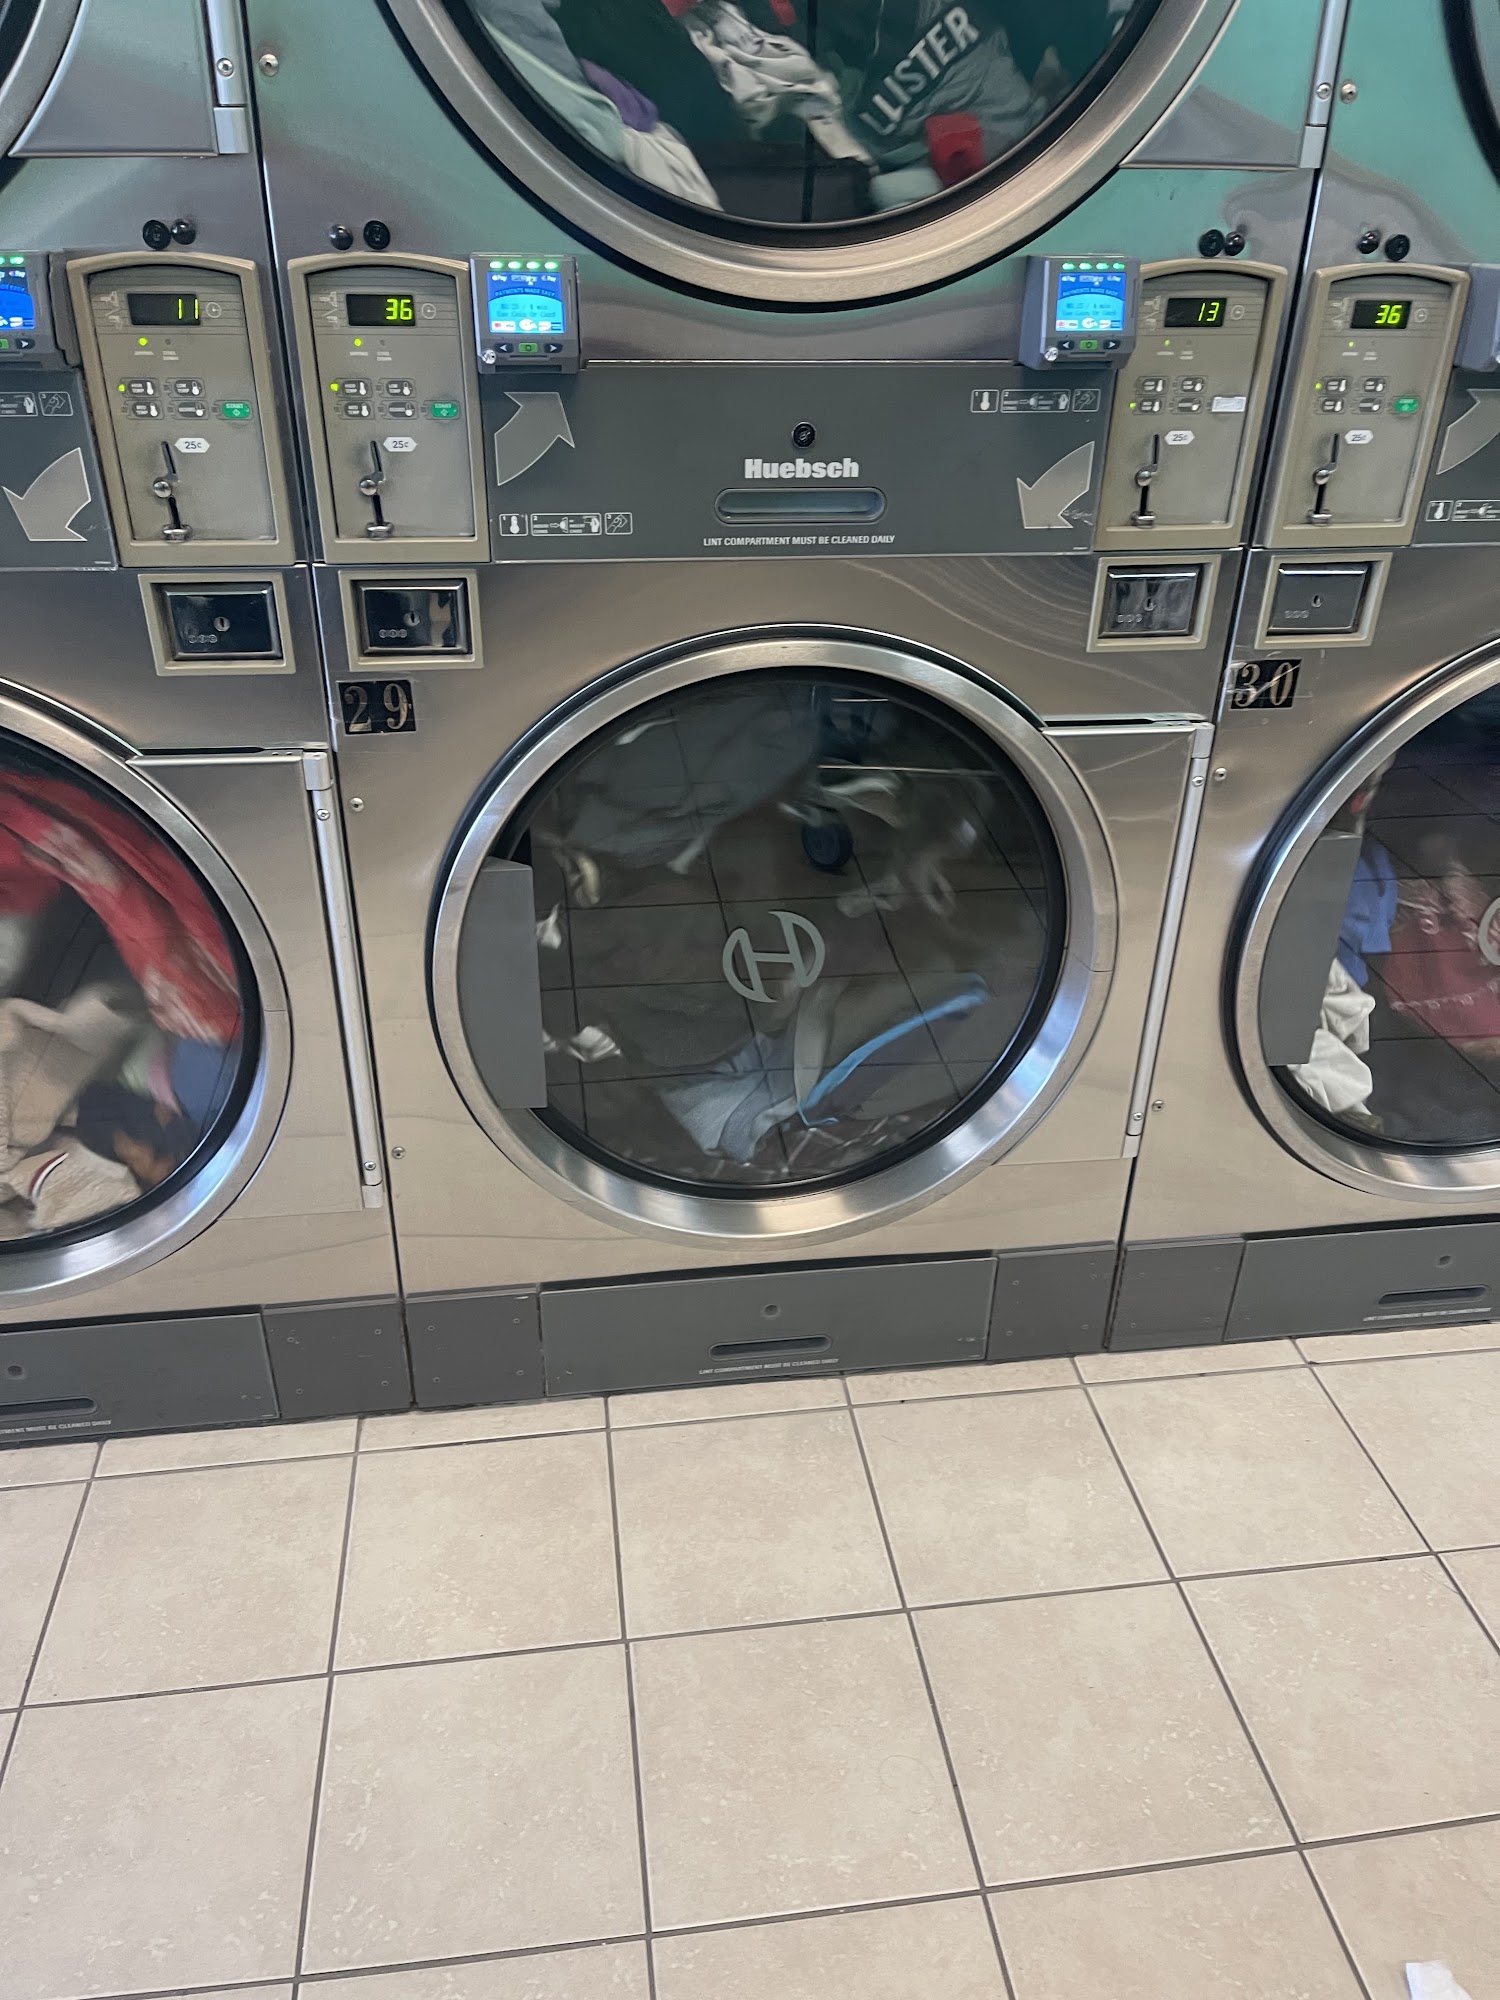 72nd Laundry